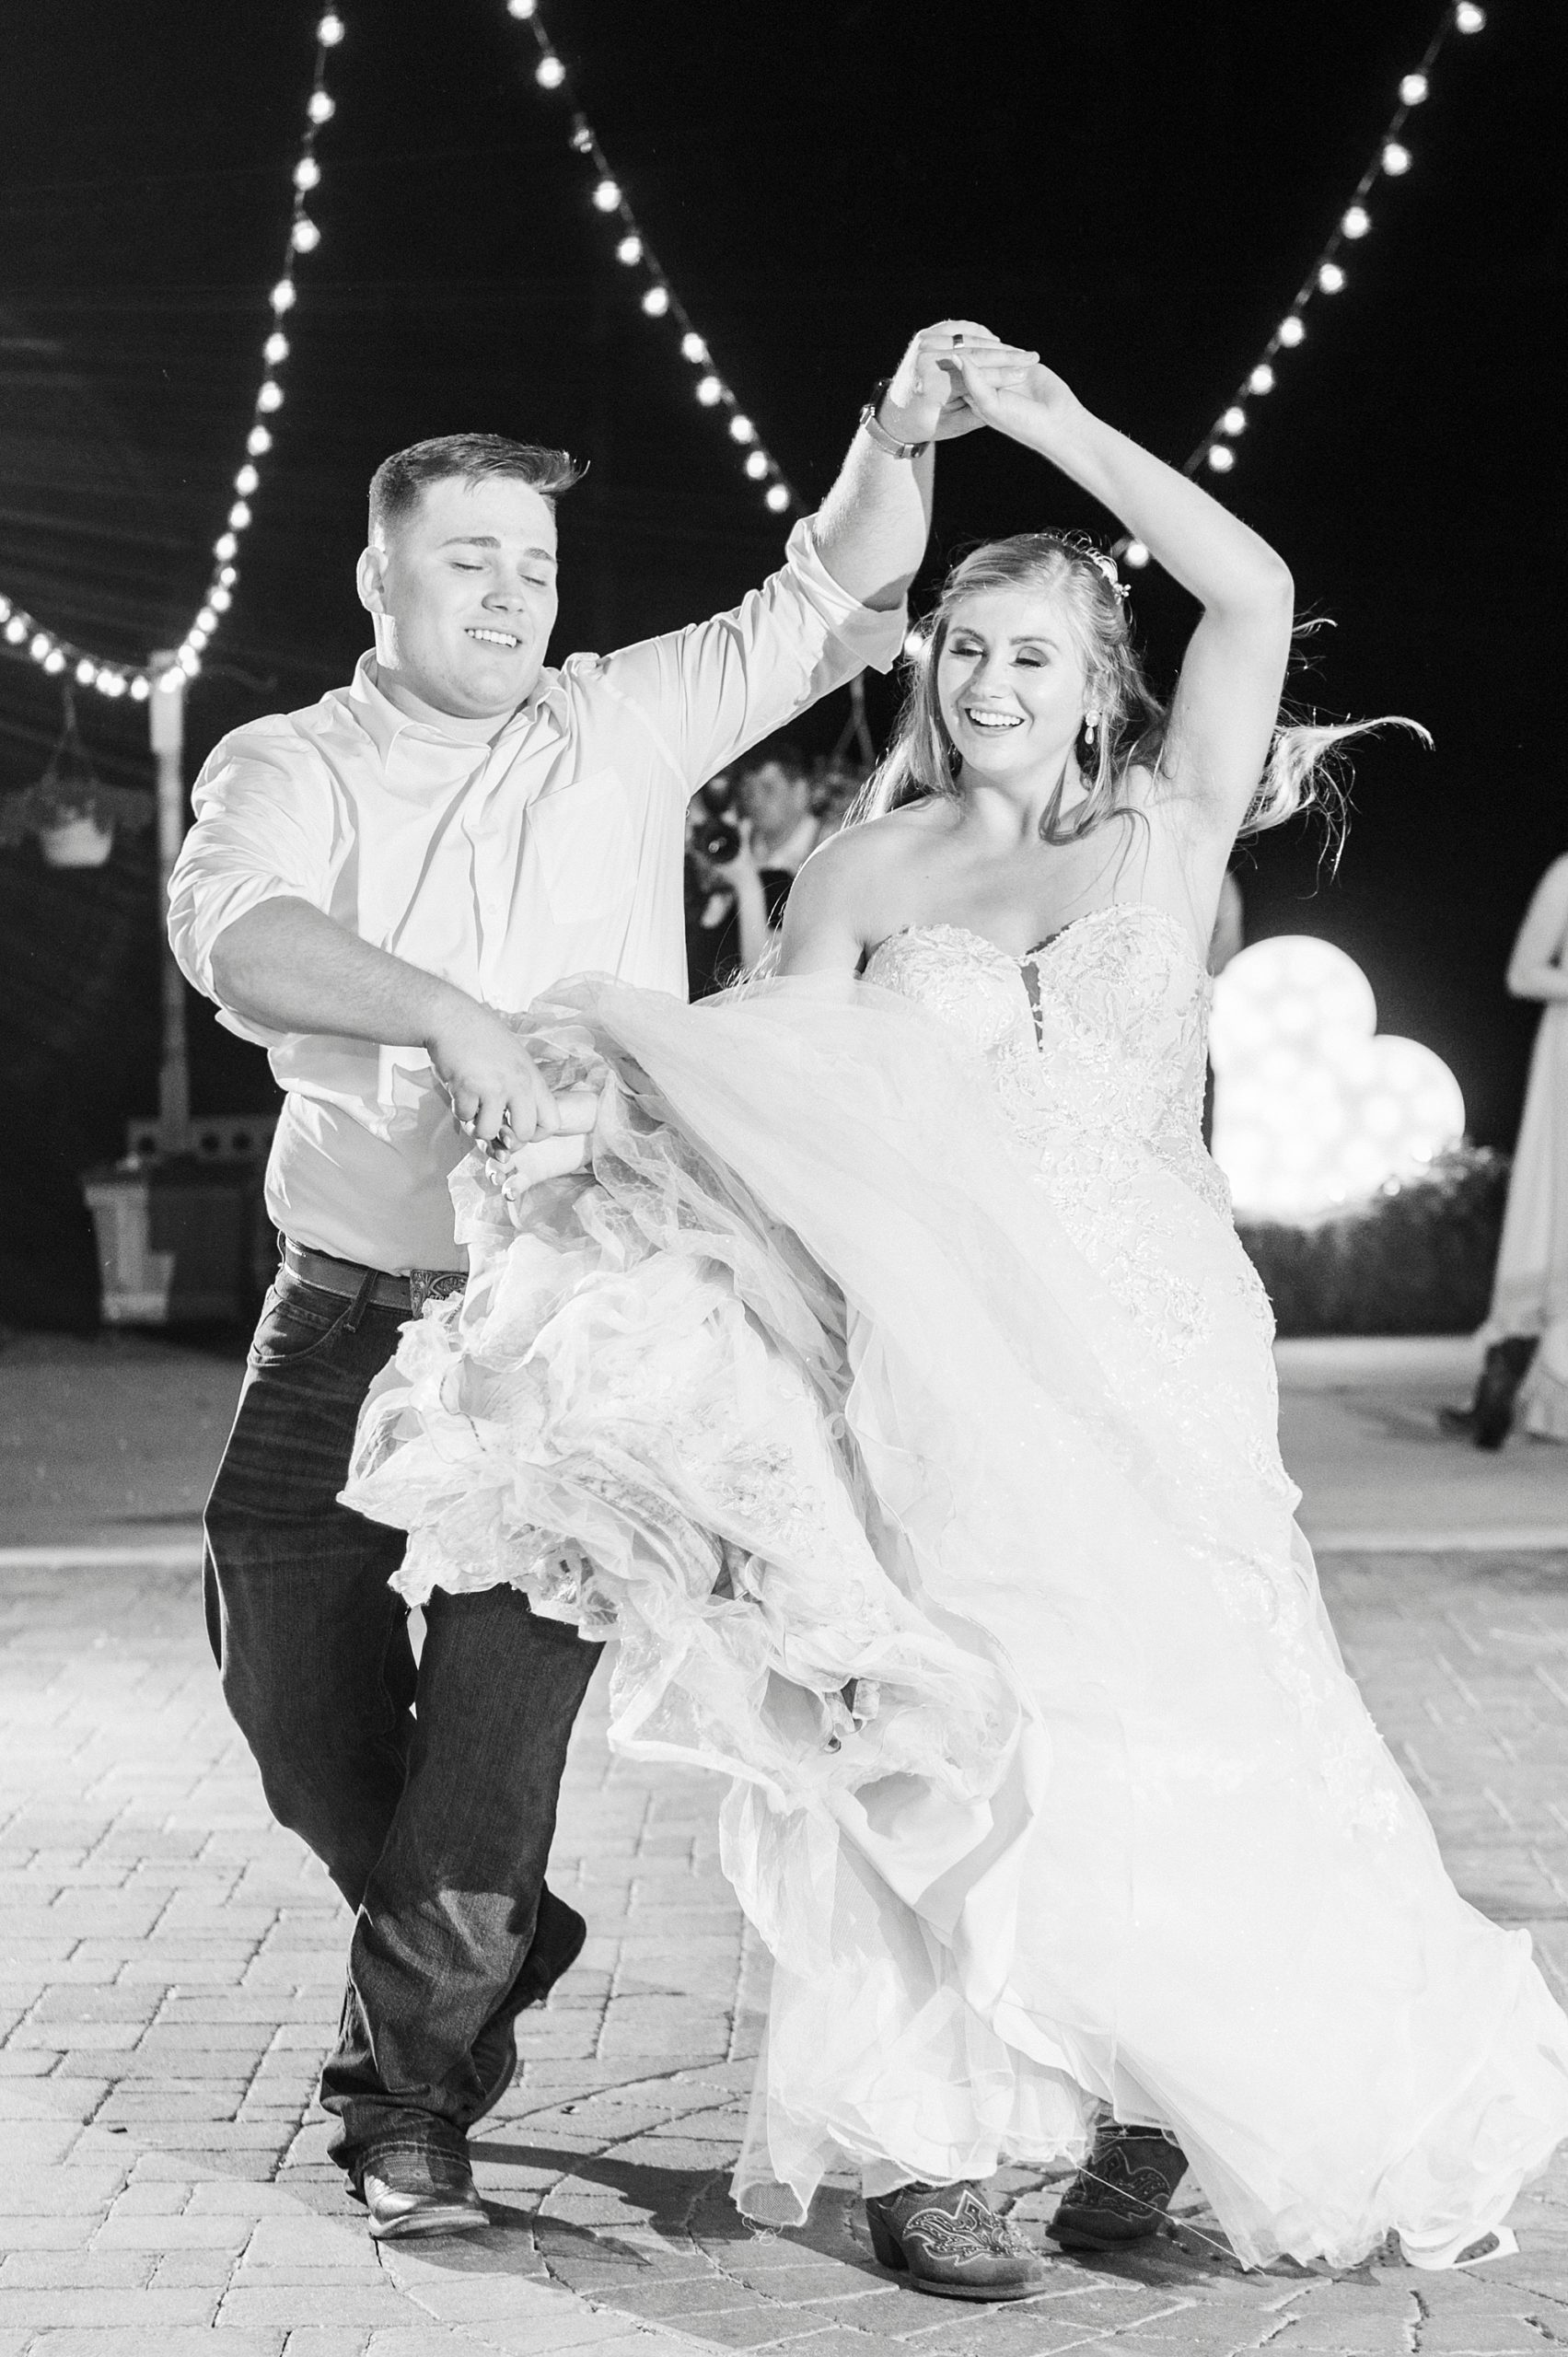 groom twirls bride during wedding reception dancing